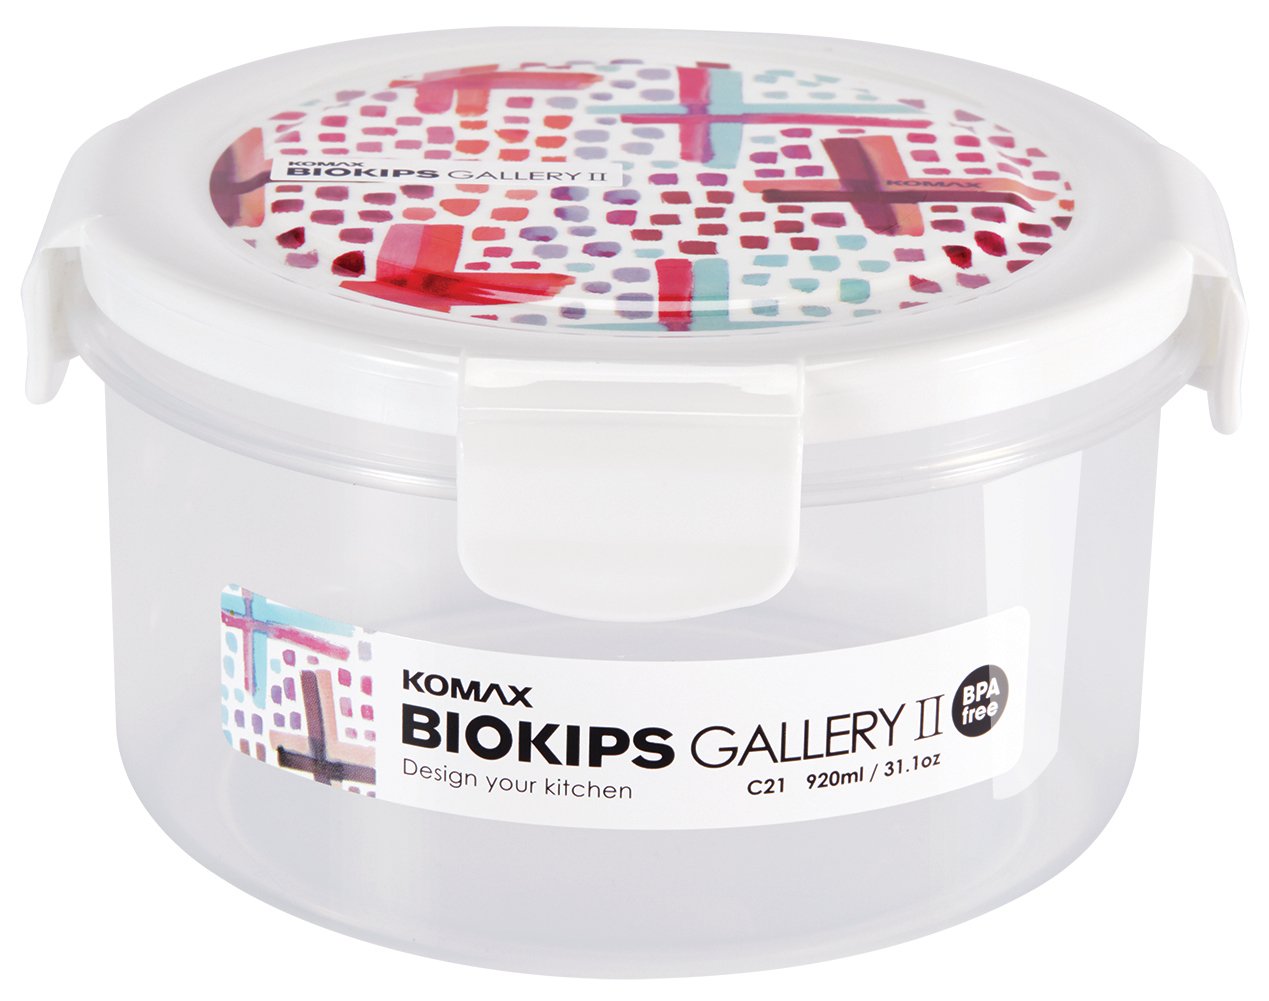 Komax Biokips Gallery II Round Food Storage Container, 920 ml